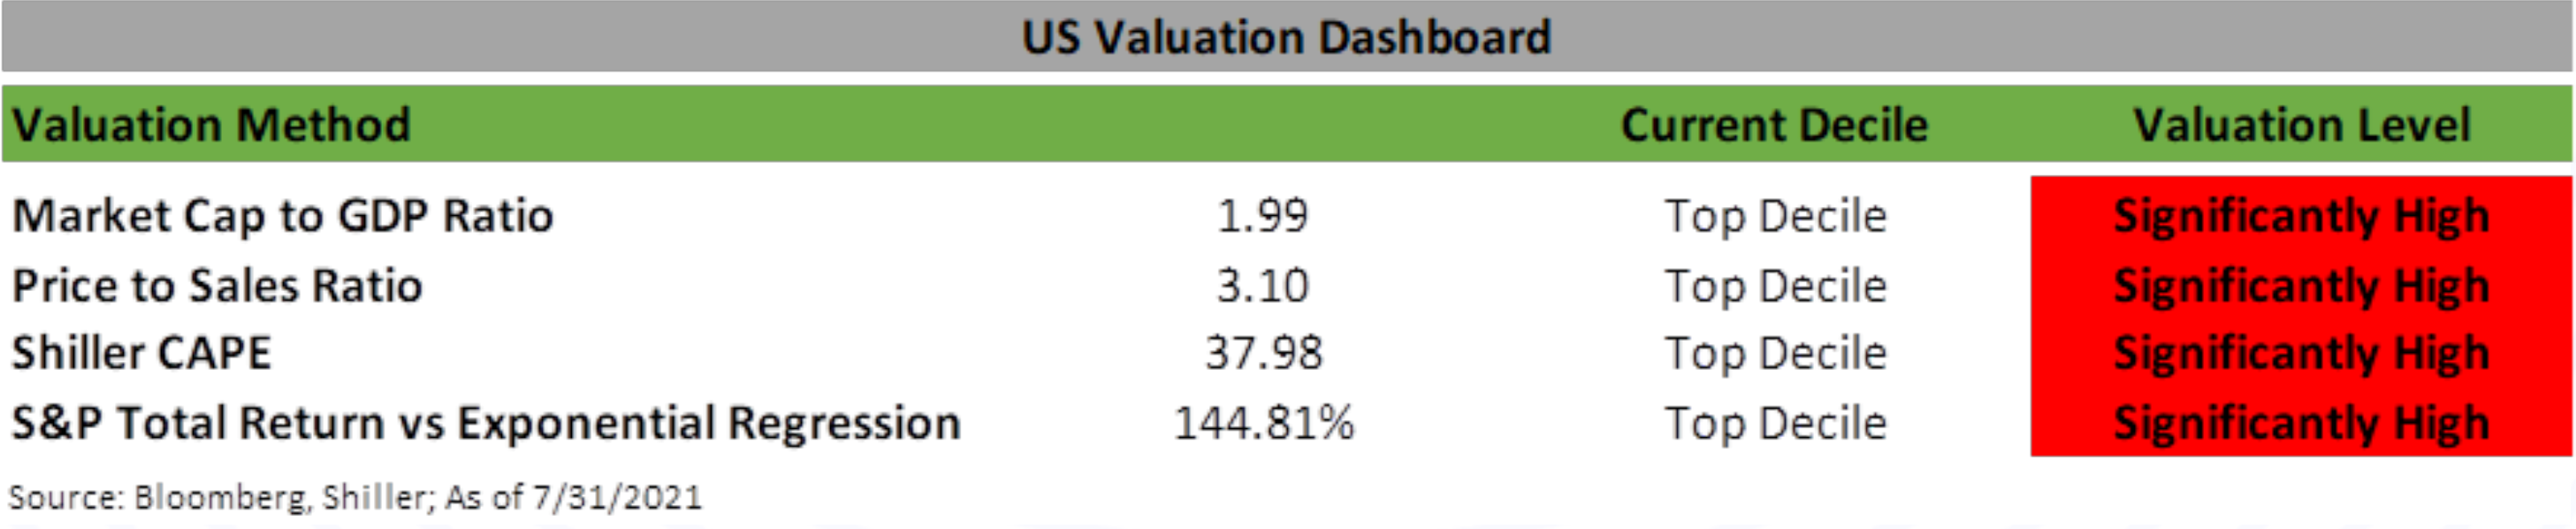 US Valuation Dashboard